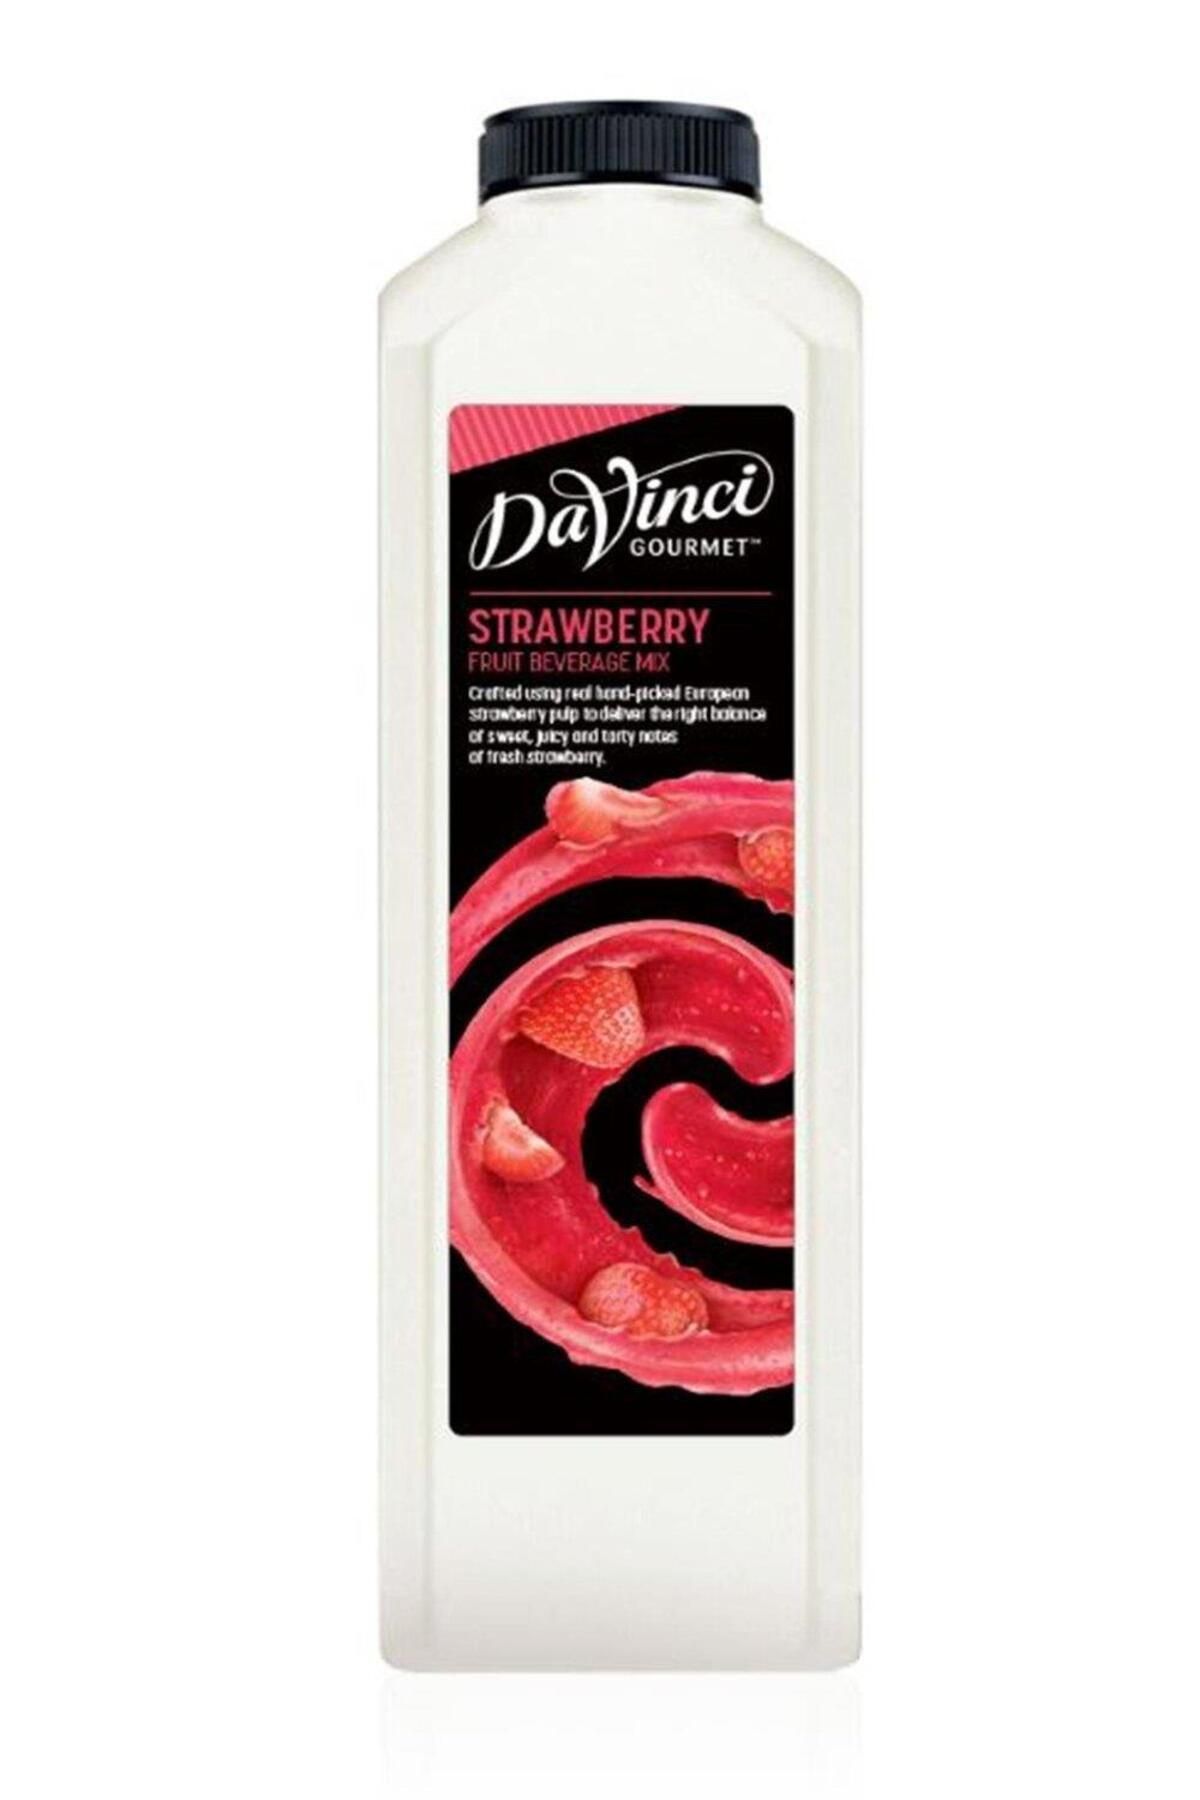 Da Vinci Gourmet Strawberry Fruit Püresi Mix 1 LT